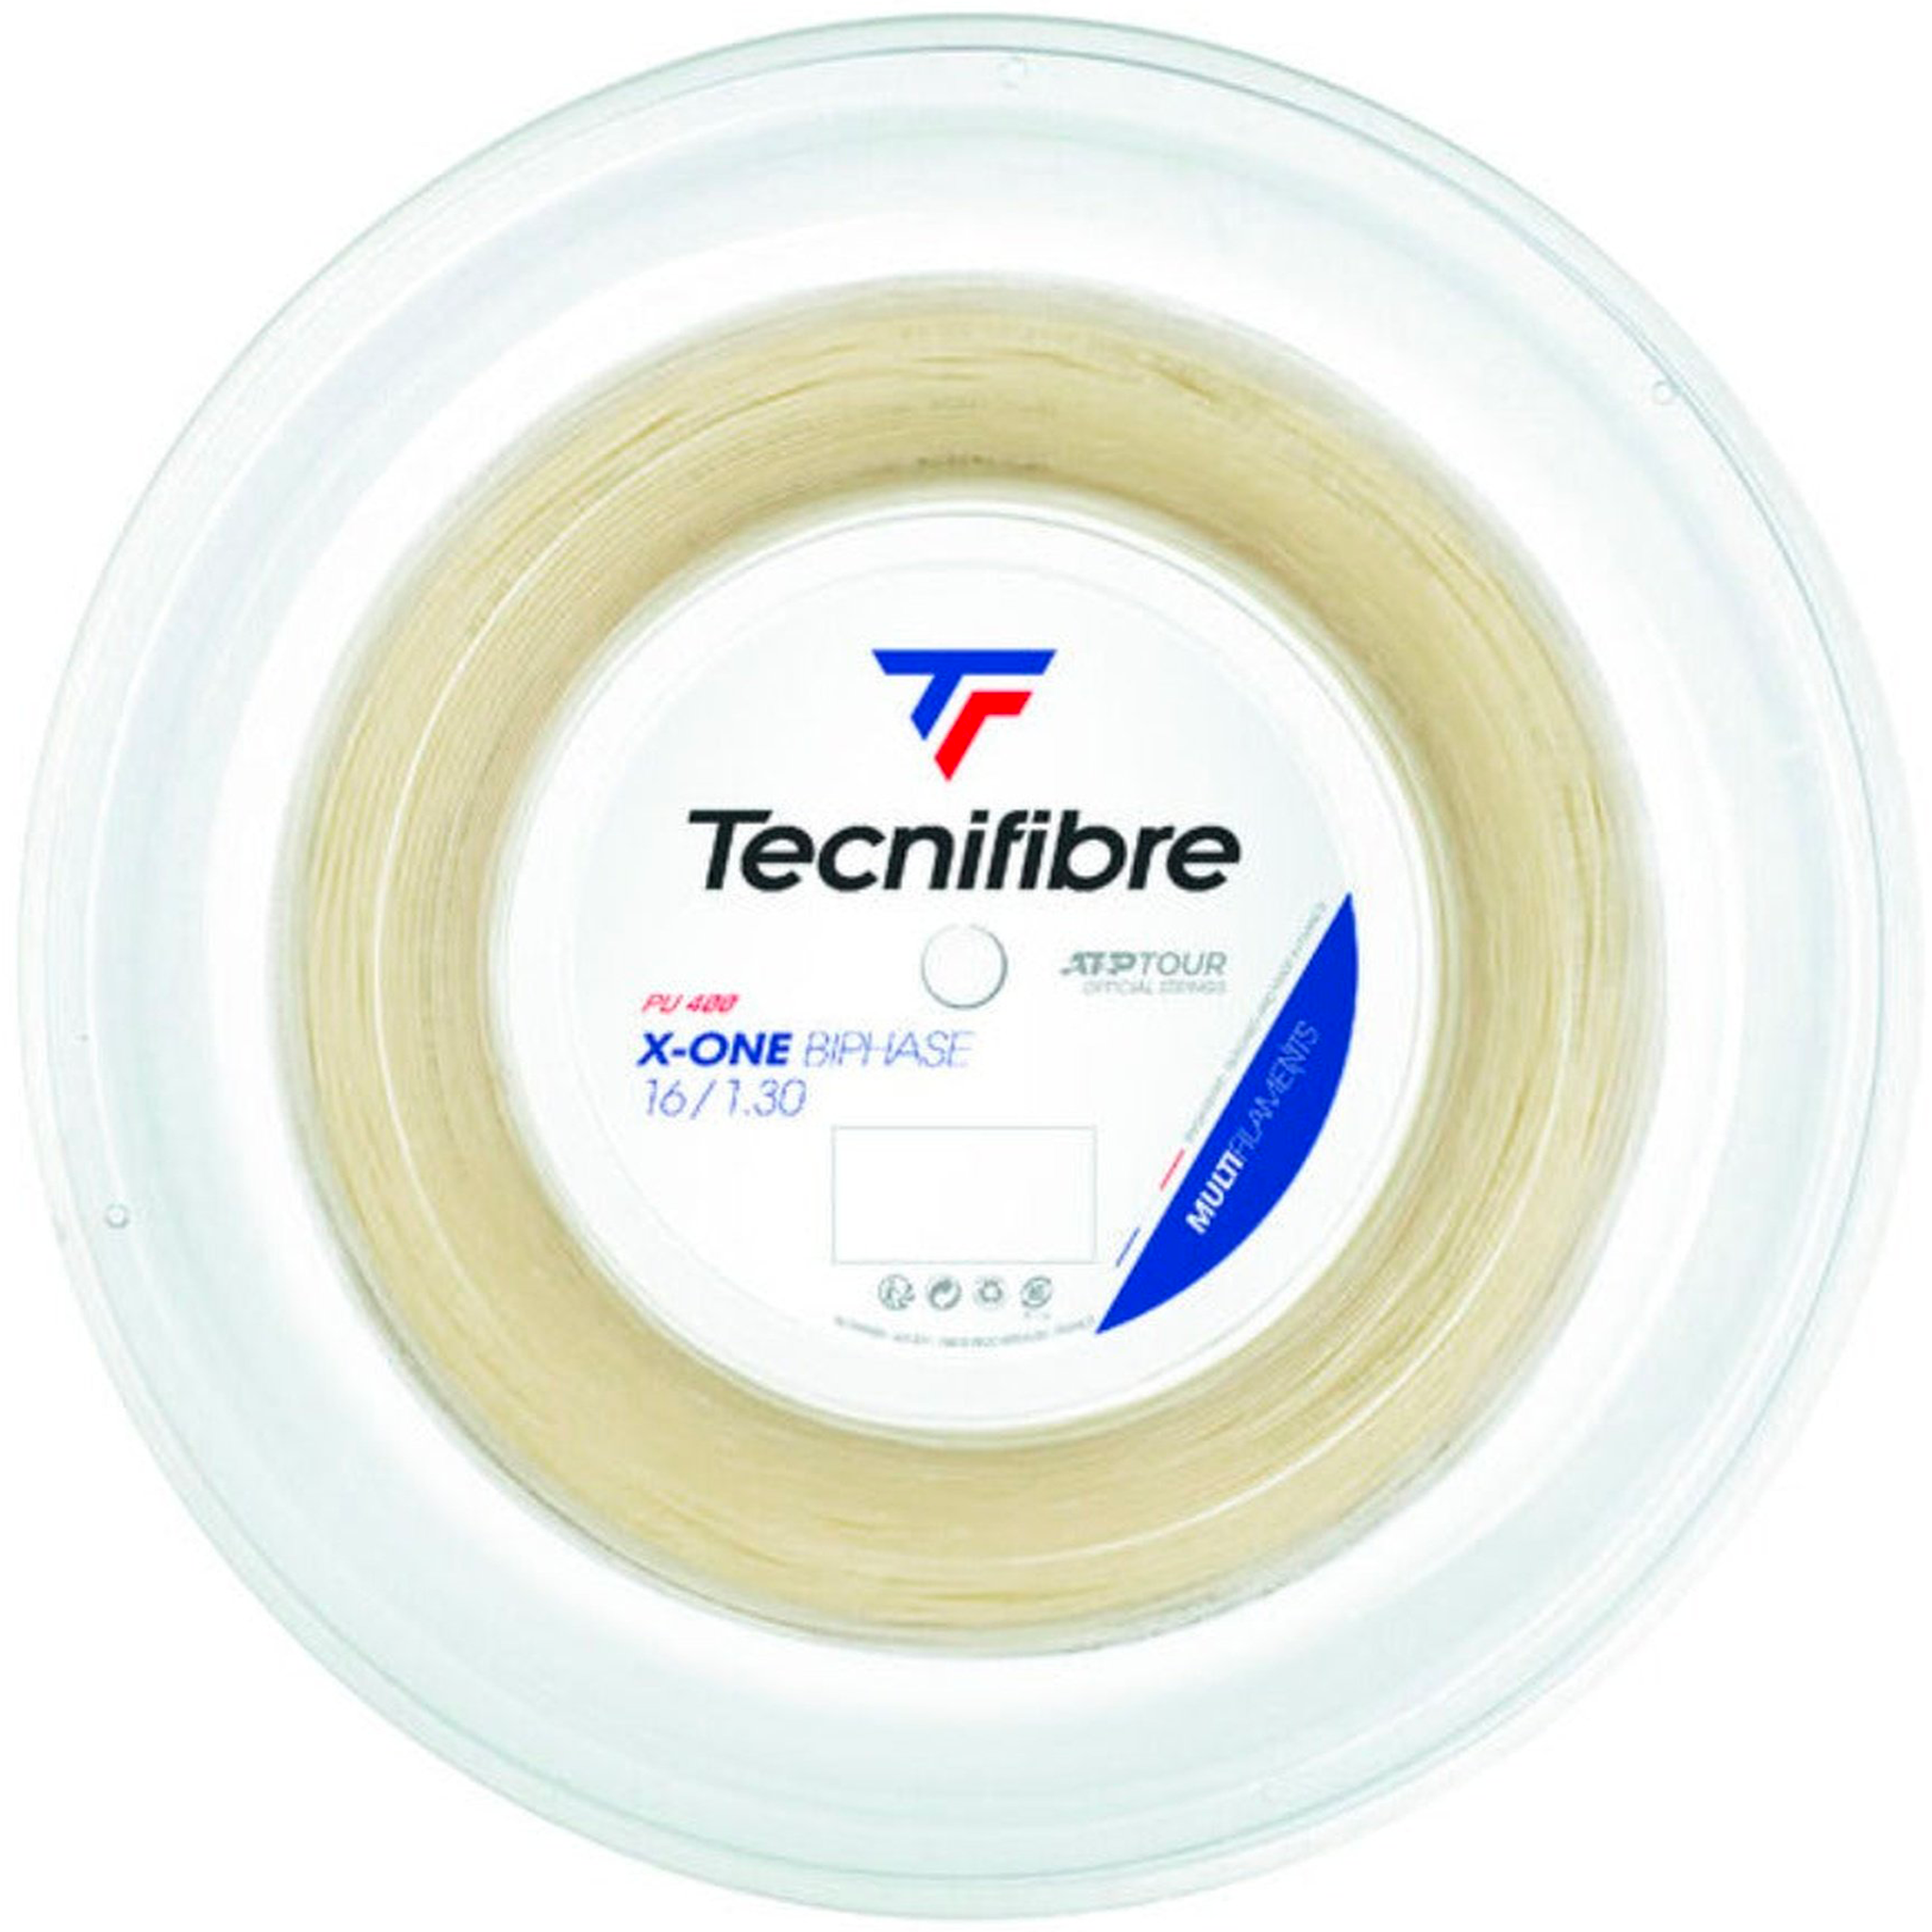 Tecnifibre X-One Biphase (Natural) 200m Reel